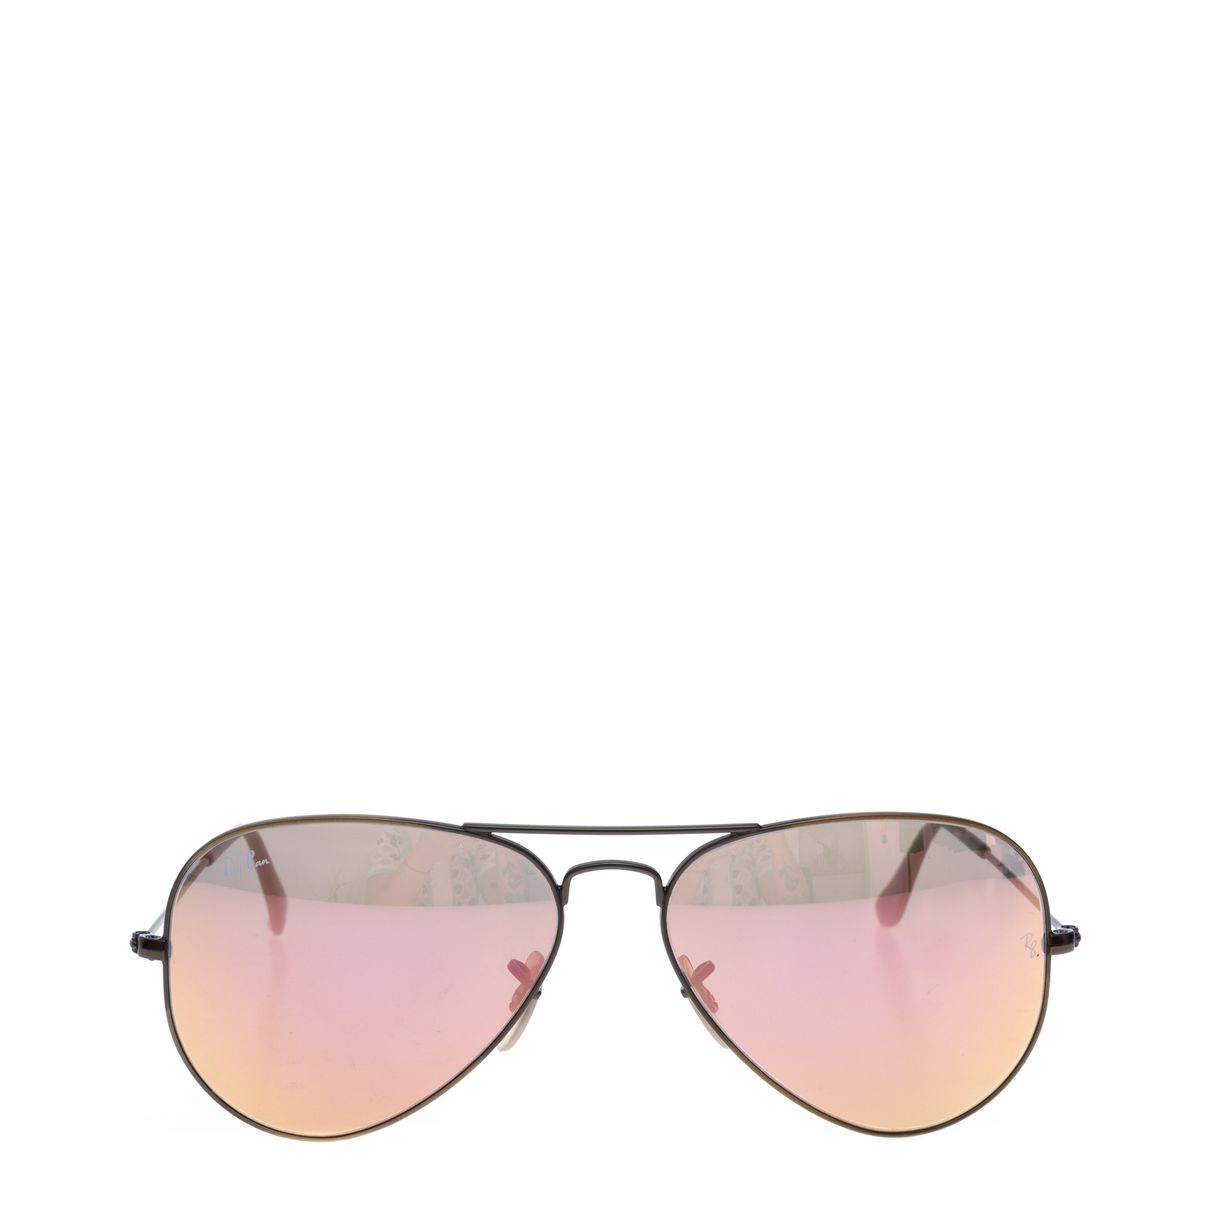 Oculos-Ray-Ban-3025-Aviator-Large-Metal-Espelhado-Rose